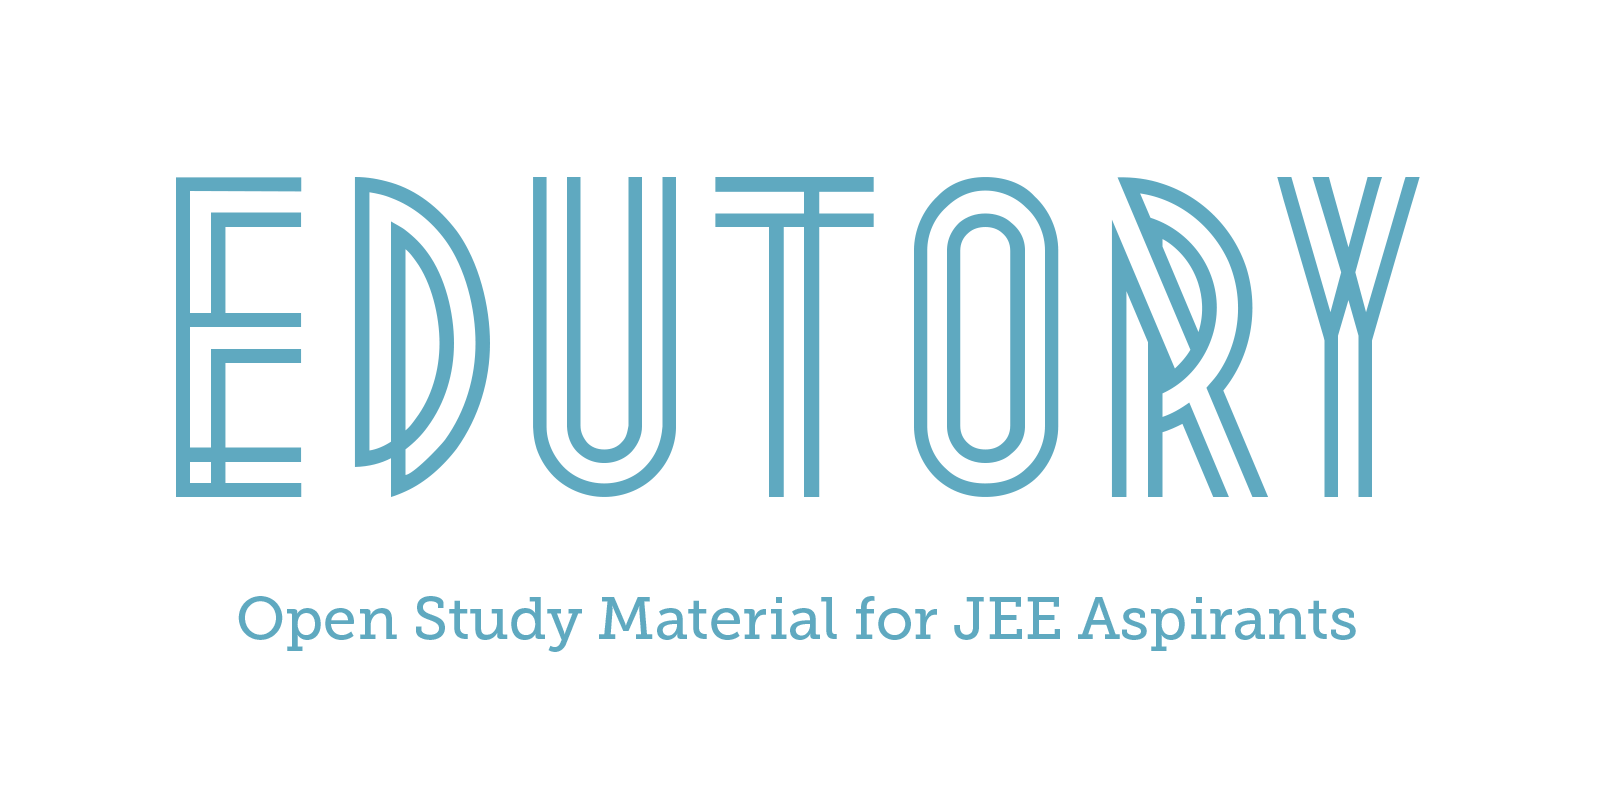 Edutron - Open Study material for JEE aspirants